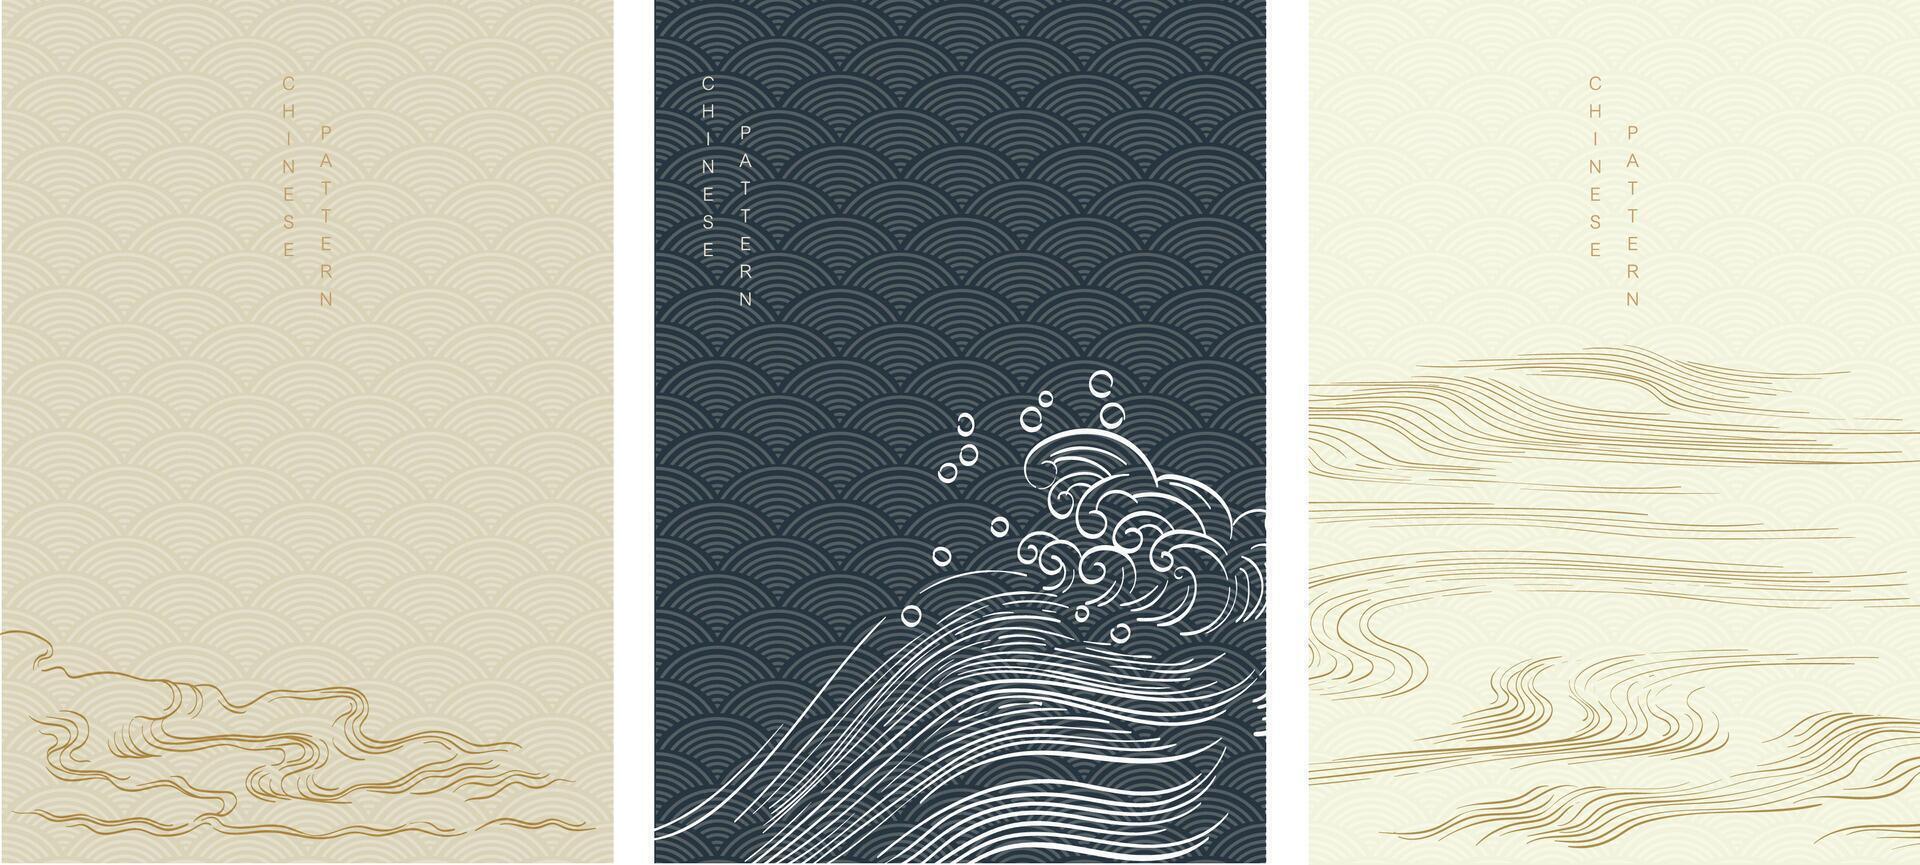 abstrakt landskap med japansk Vinka mönster vektor. natur konst bakgrund med kinesisk Vinka och moln mall i orientalisk stil. hand dragen linje element vektor